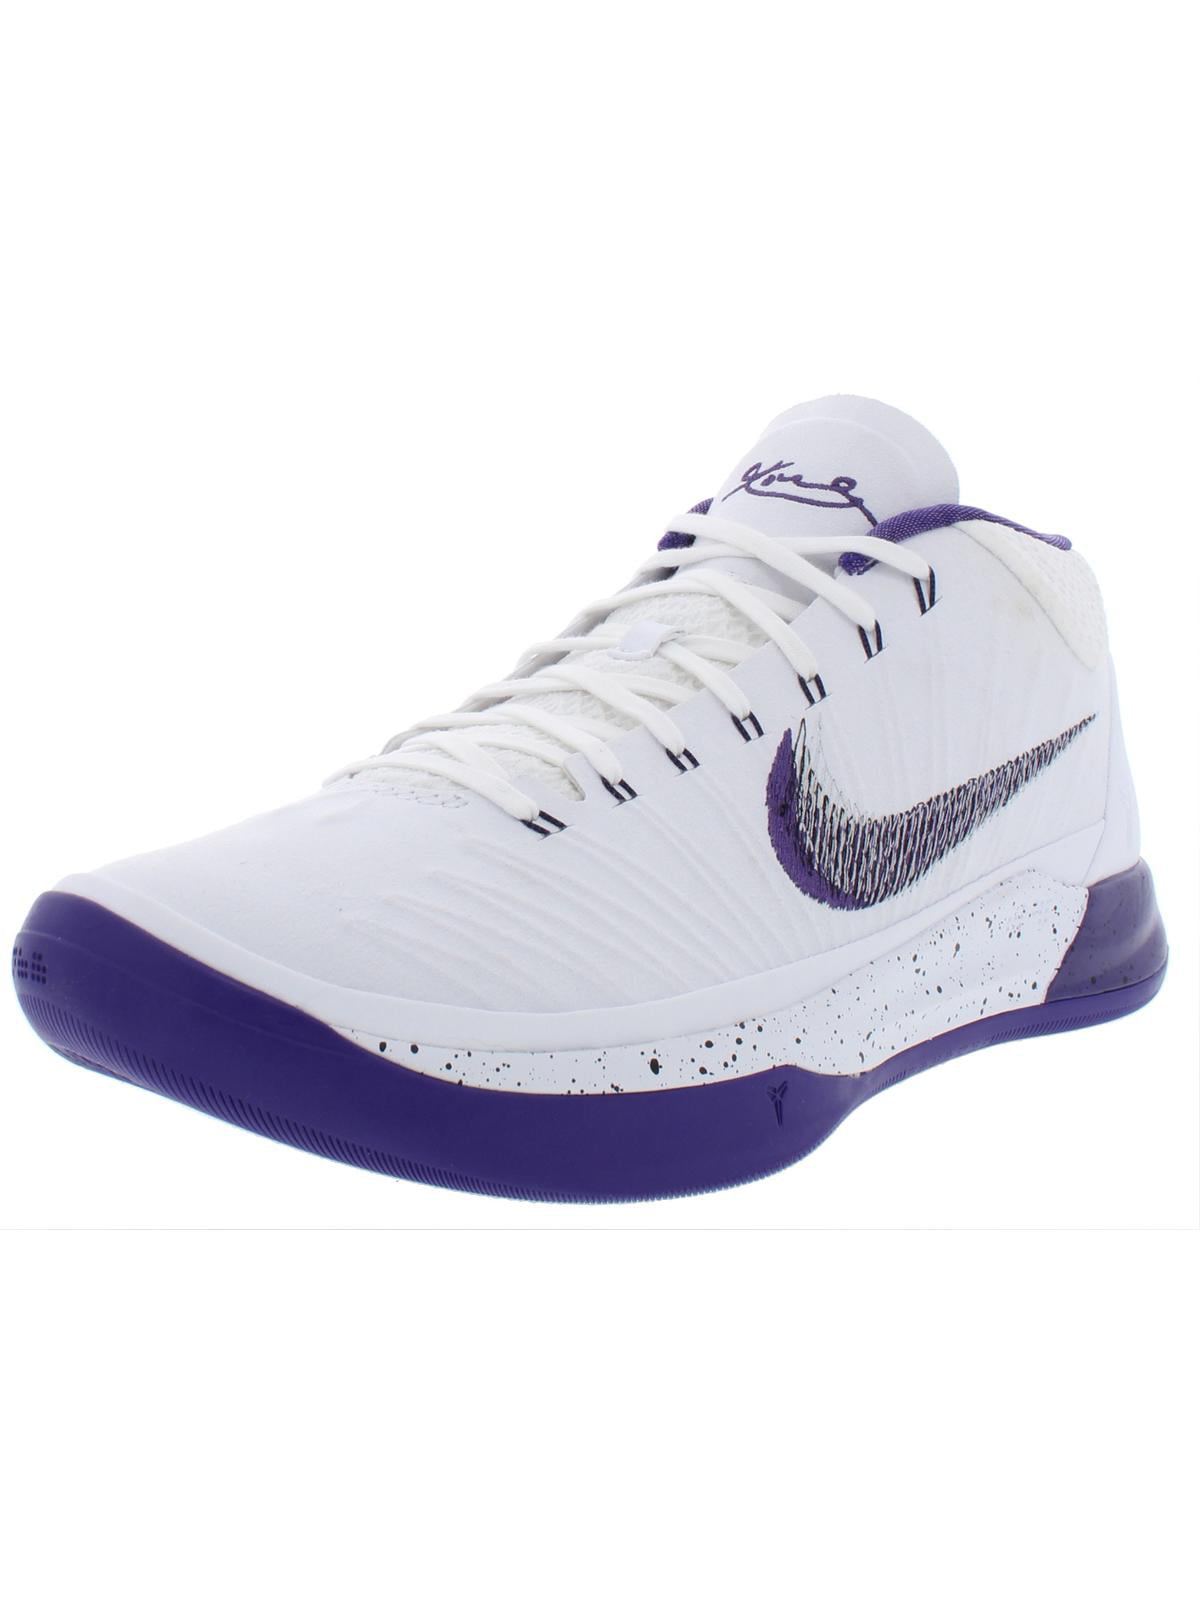 artikel gemakkelijk prioriteit Nike Mens Kobe AD Padded Insole Sport Basketball Shoes White 8.5 Medium (D)  - Walmart.com